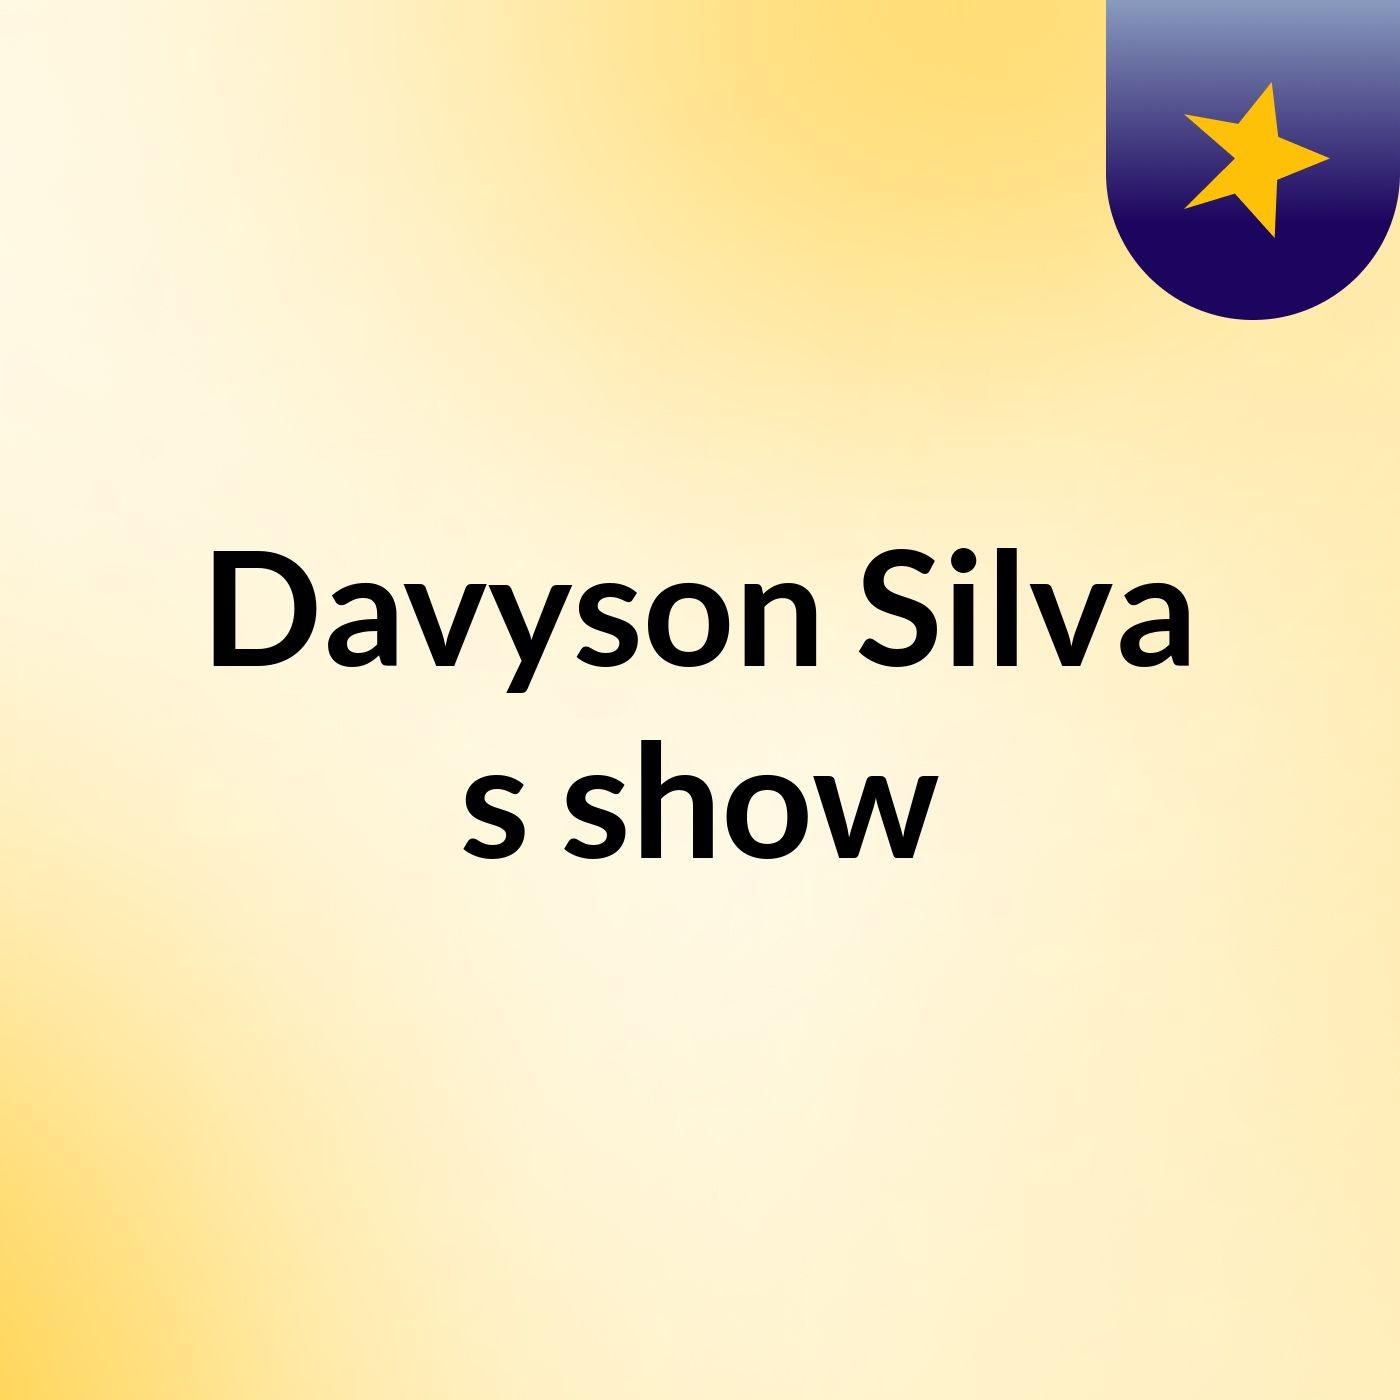 Davyson Silva's show